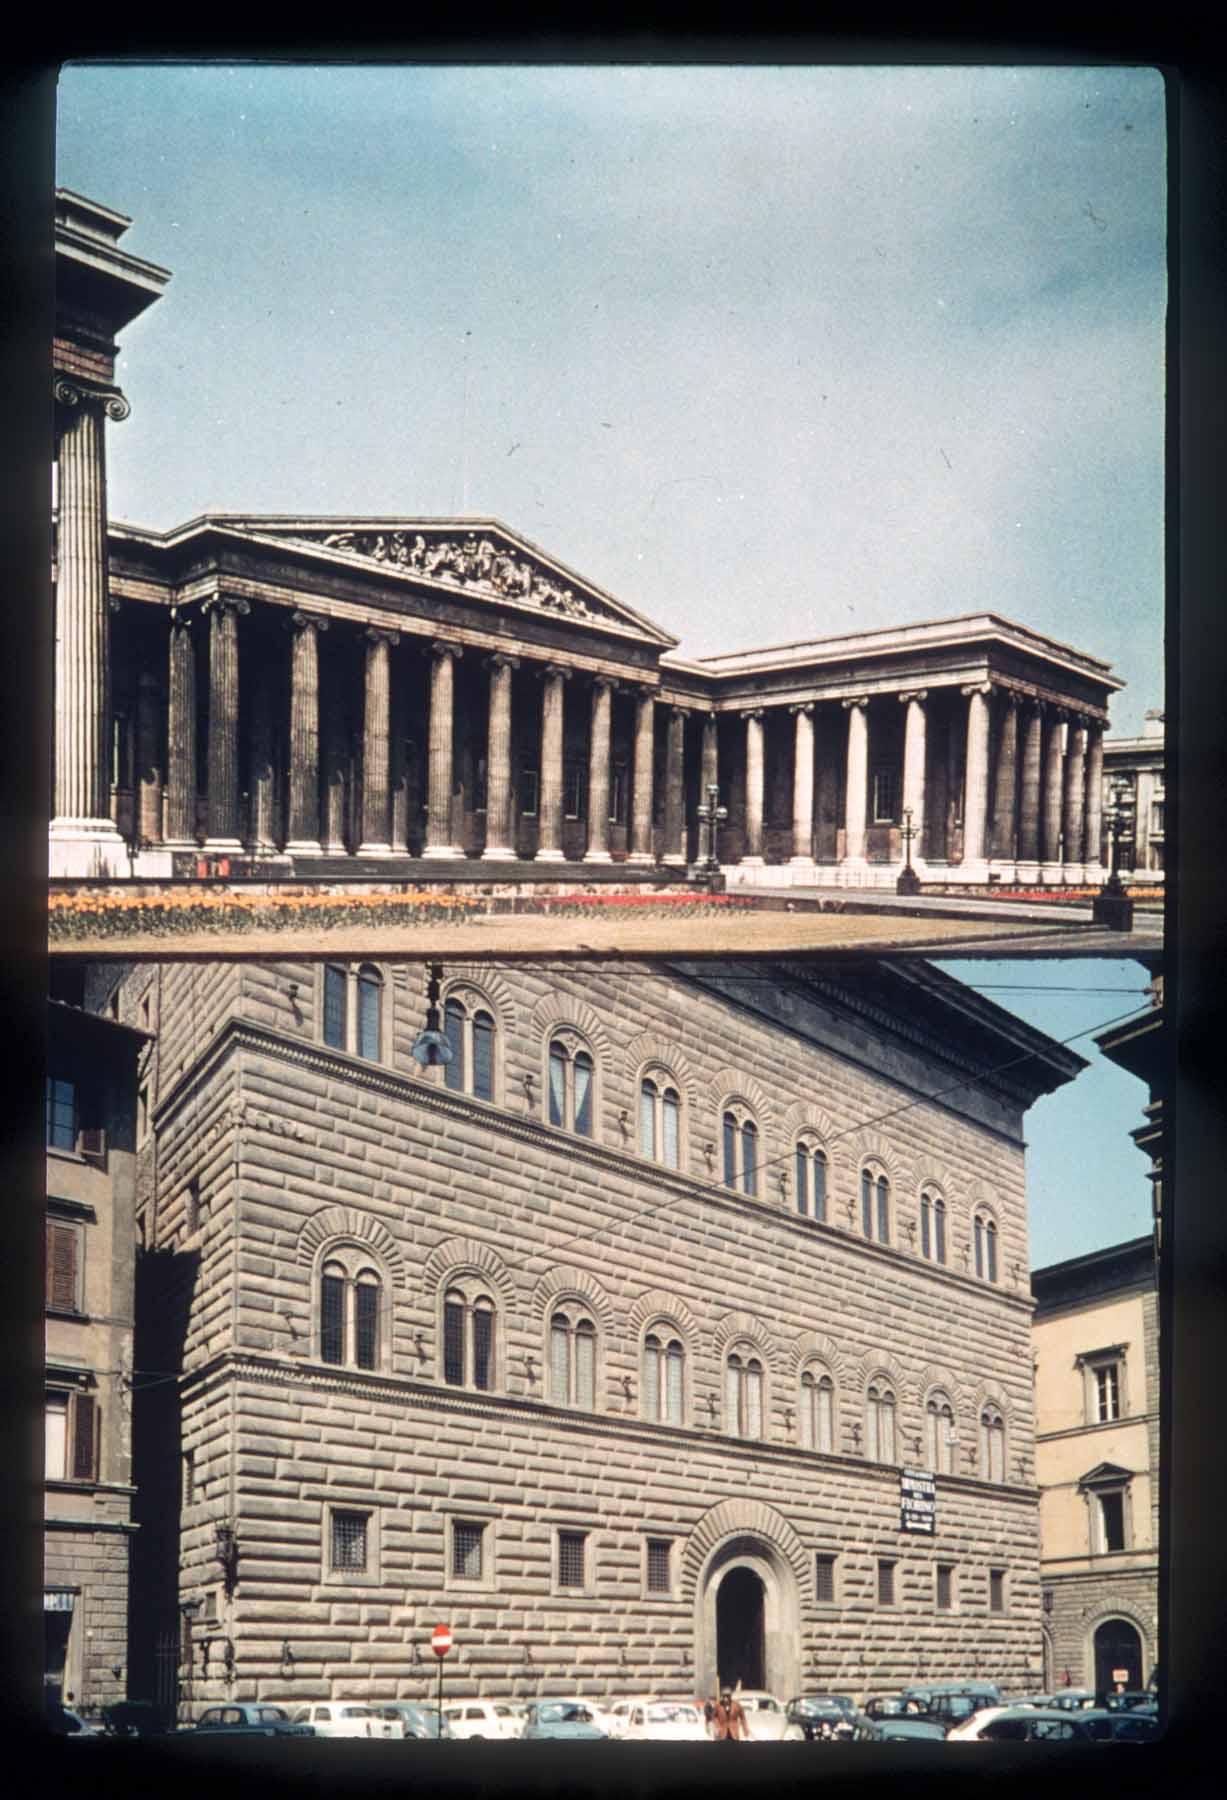 Top: British Museum, London. Bottom: Strozzi Palace, Florence